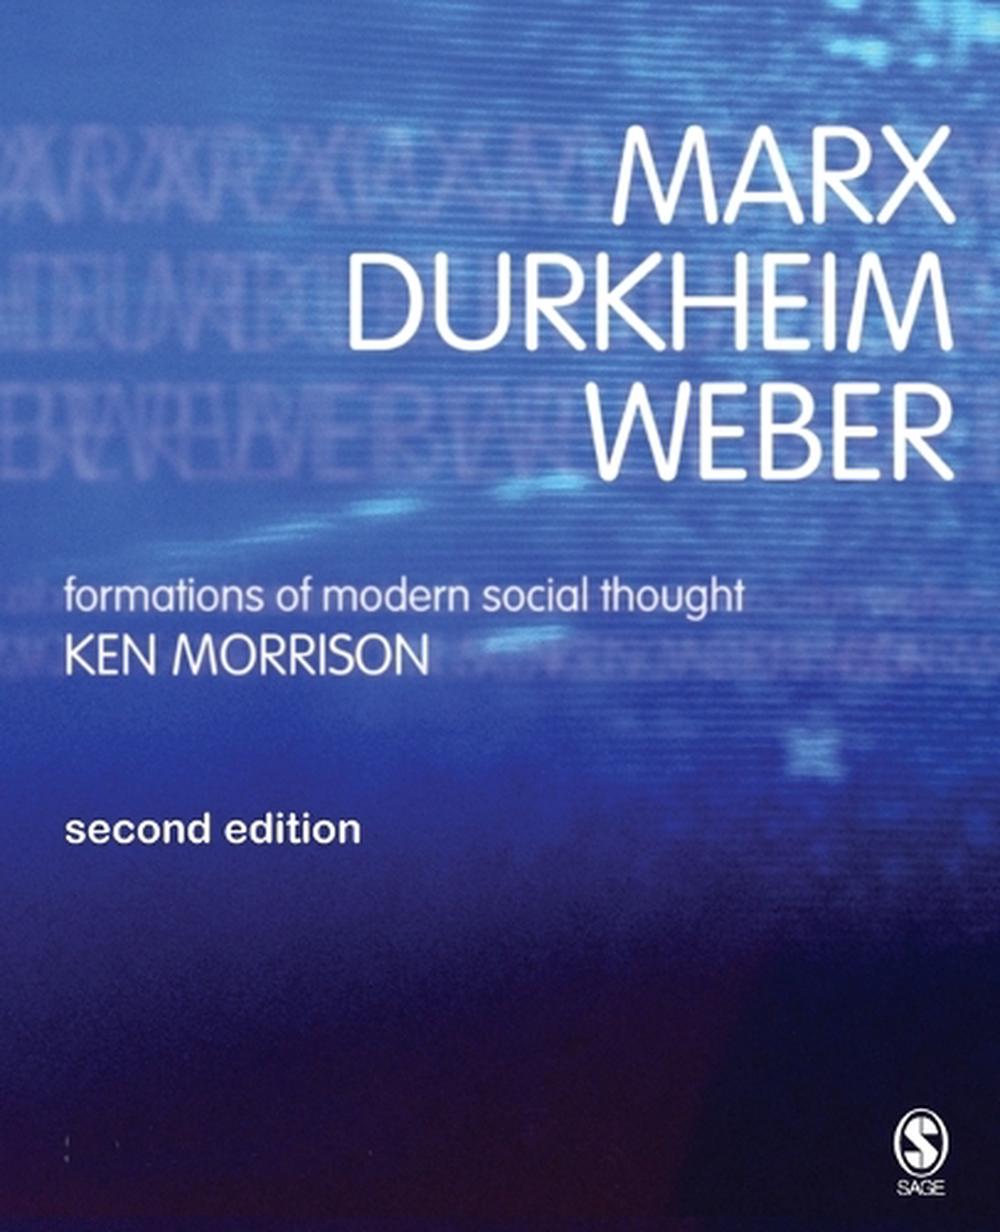 Marx, Durkheim, Weber Formations of Modern Social Thought by Ken Morrison (Engl 9780761970569